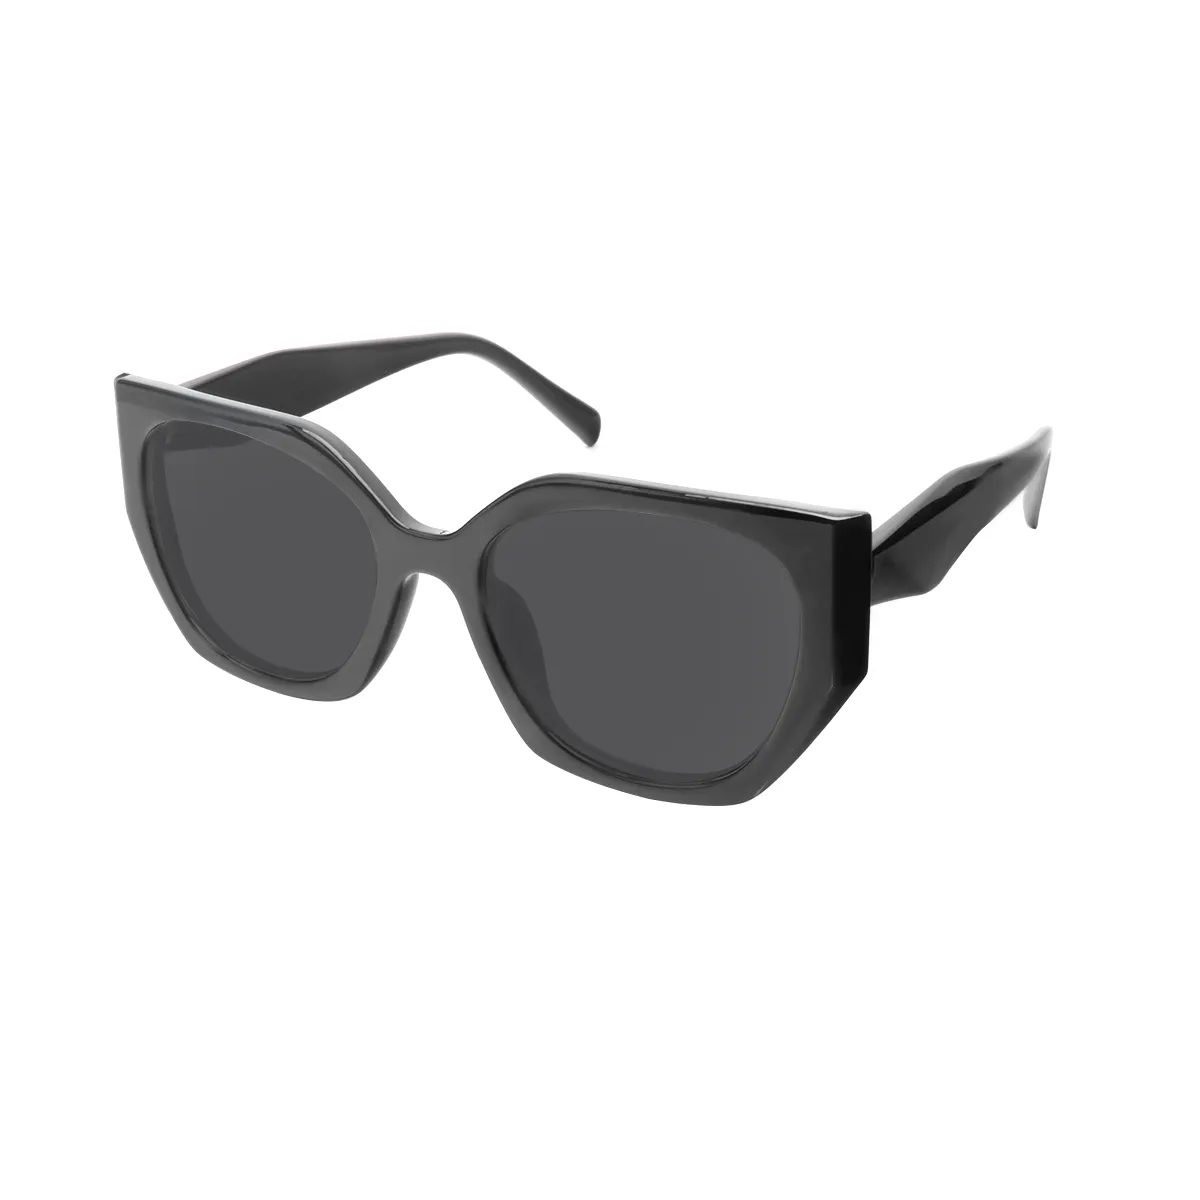 Prater - Geometric Black Sunglasses for Women